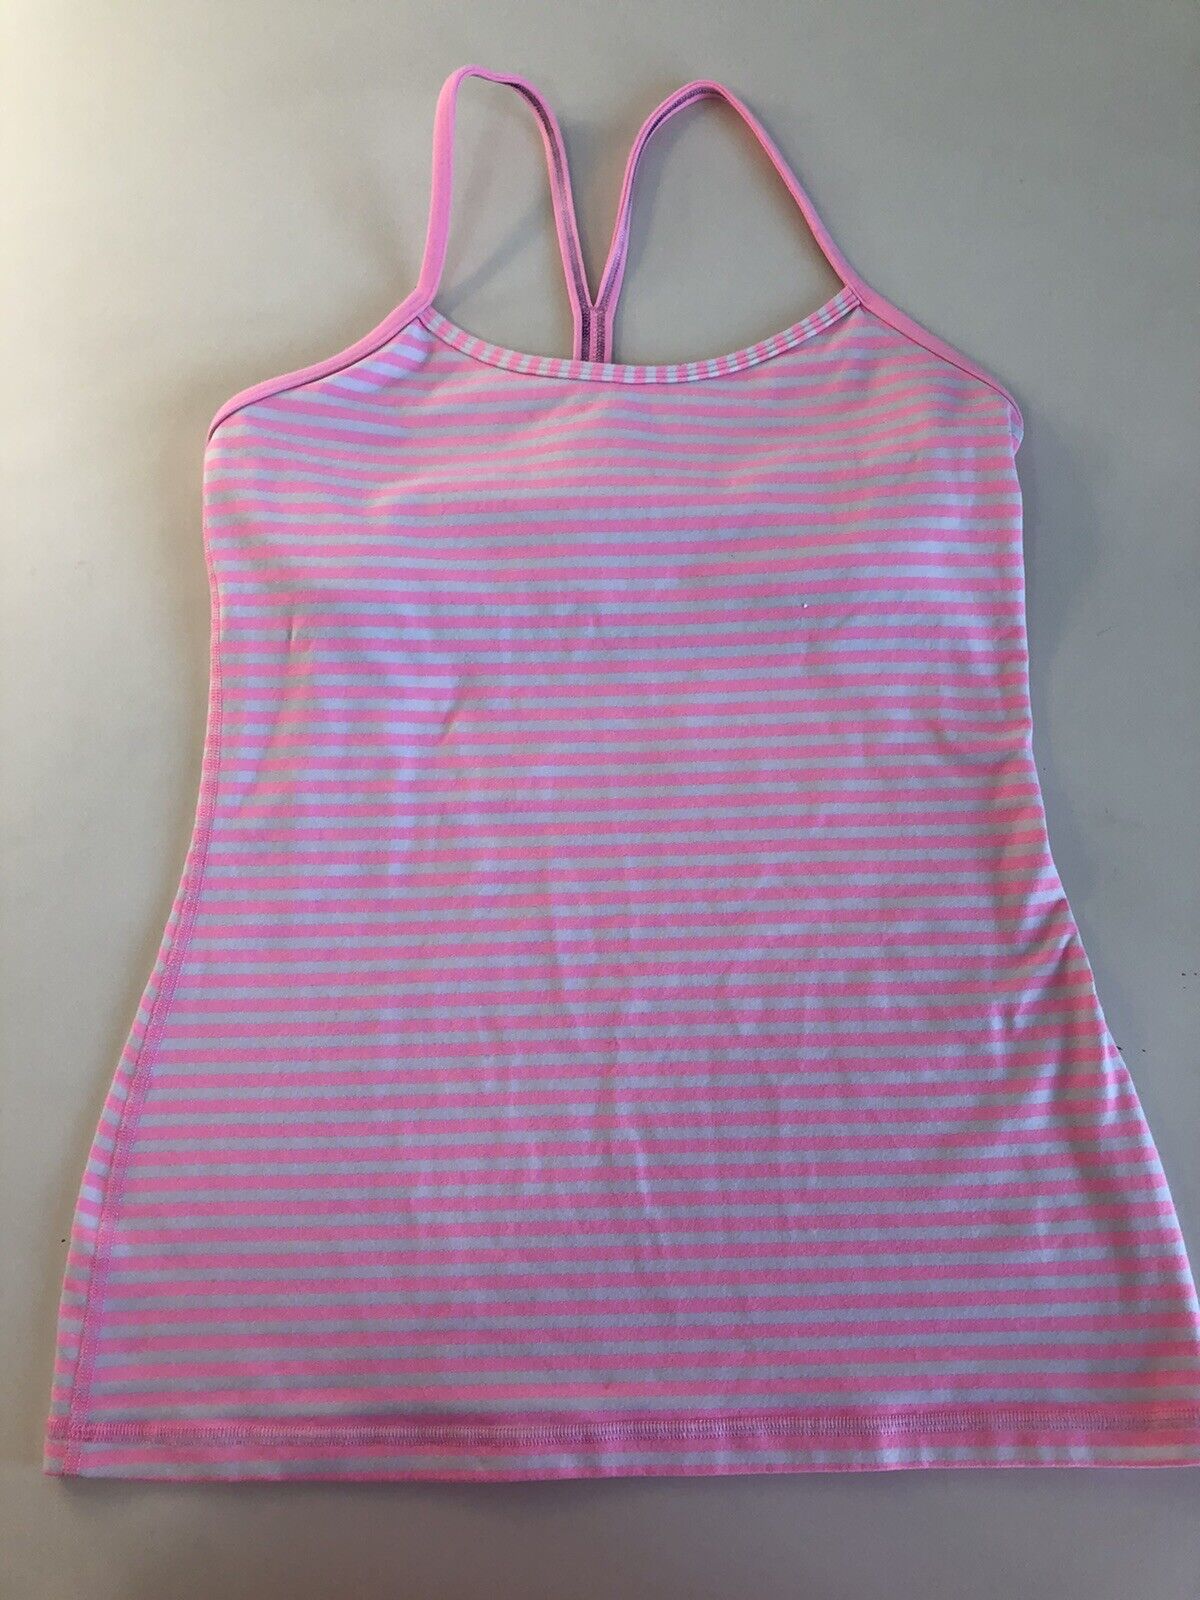 Pink Striped Lululemon Athletic Yoga Tank Top Shirt Built In Bra Womens Size 8